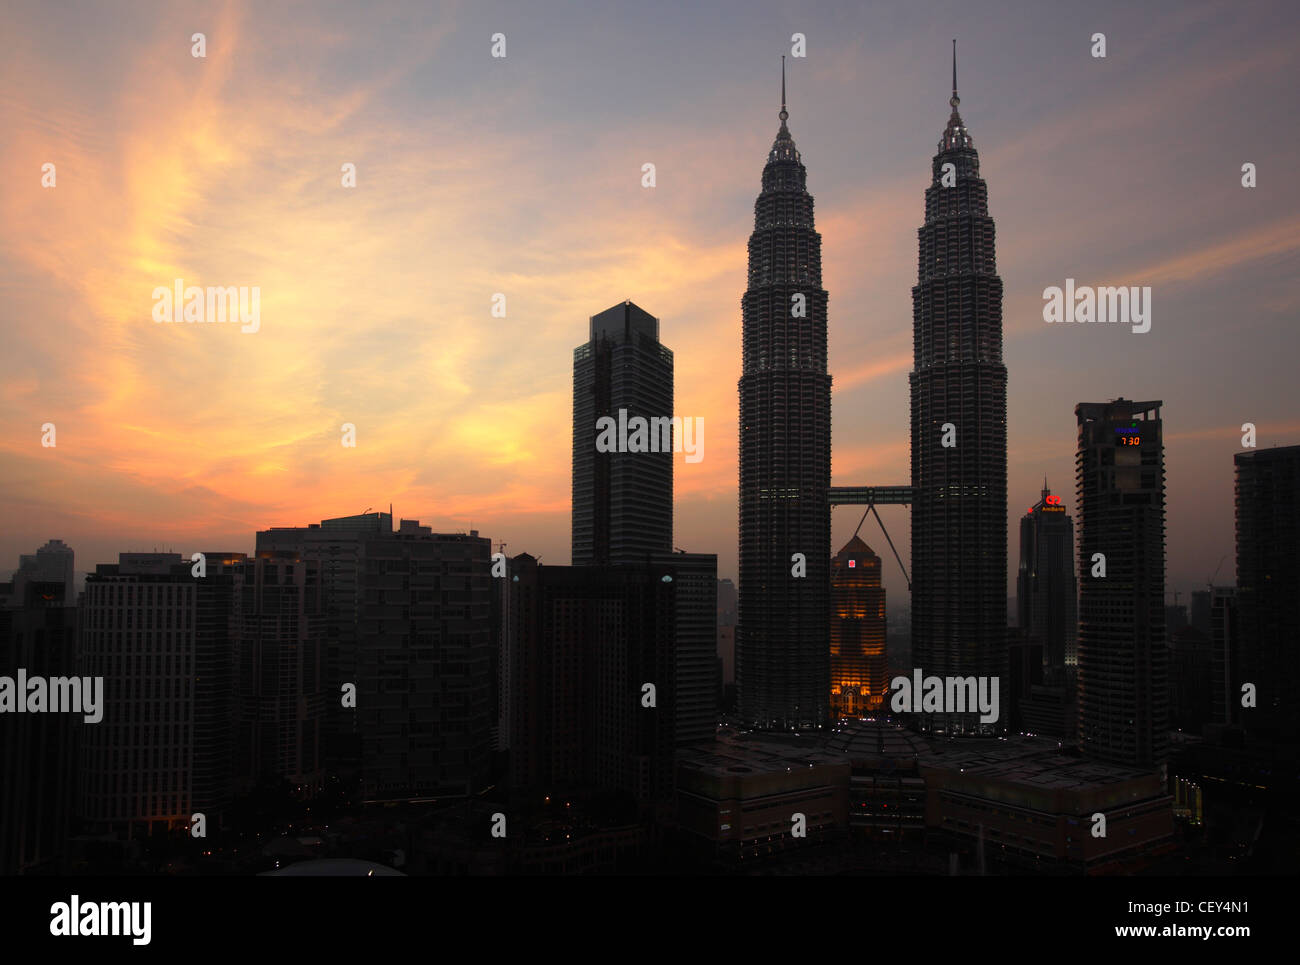 Menara Petronas Towers bei Sonnenuntergang, Kuala Lumpur, Malaysia Stockfoto